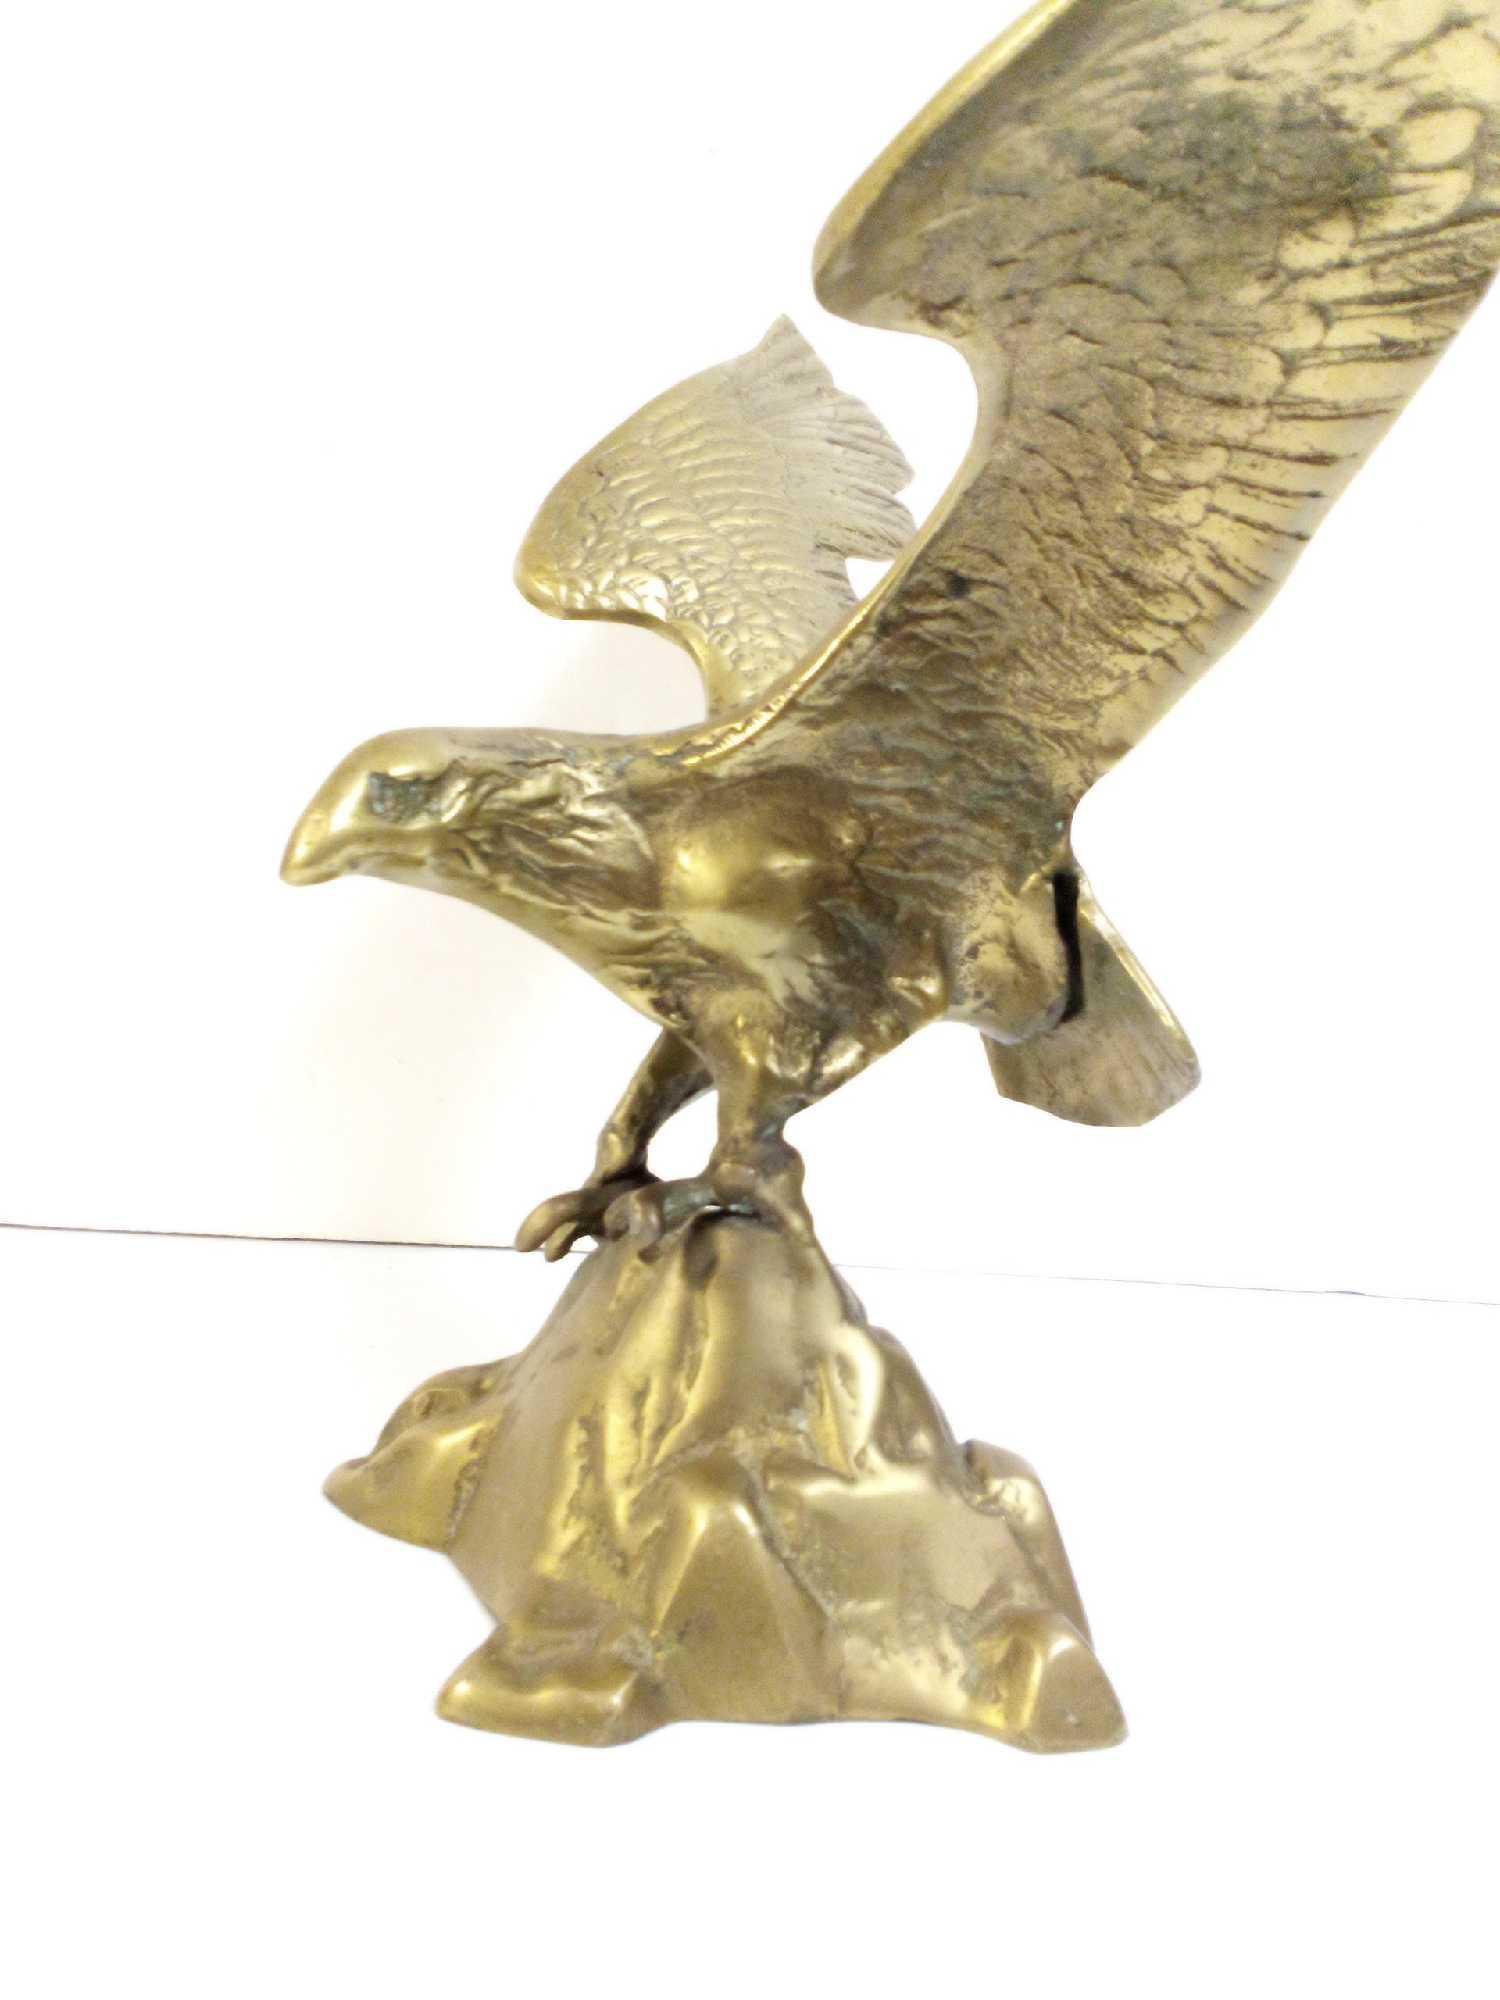 Vintage Brass Eagle on Rocks, Circa 1960s?